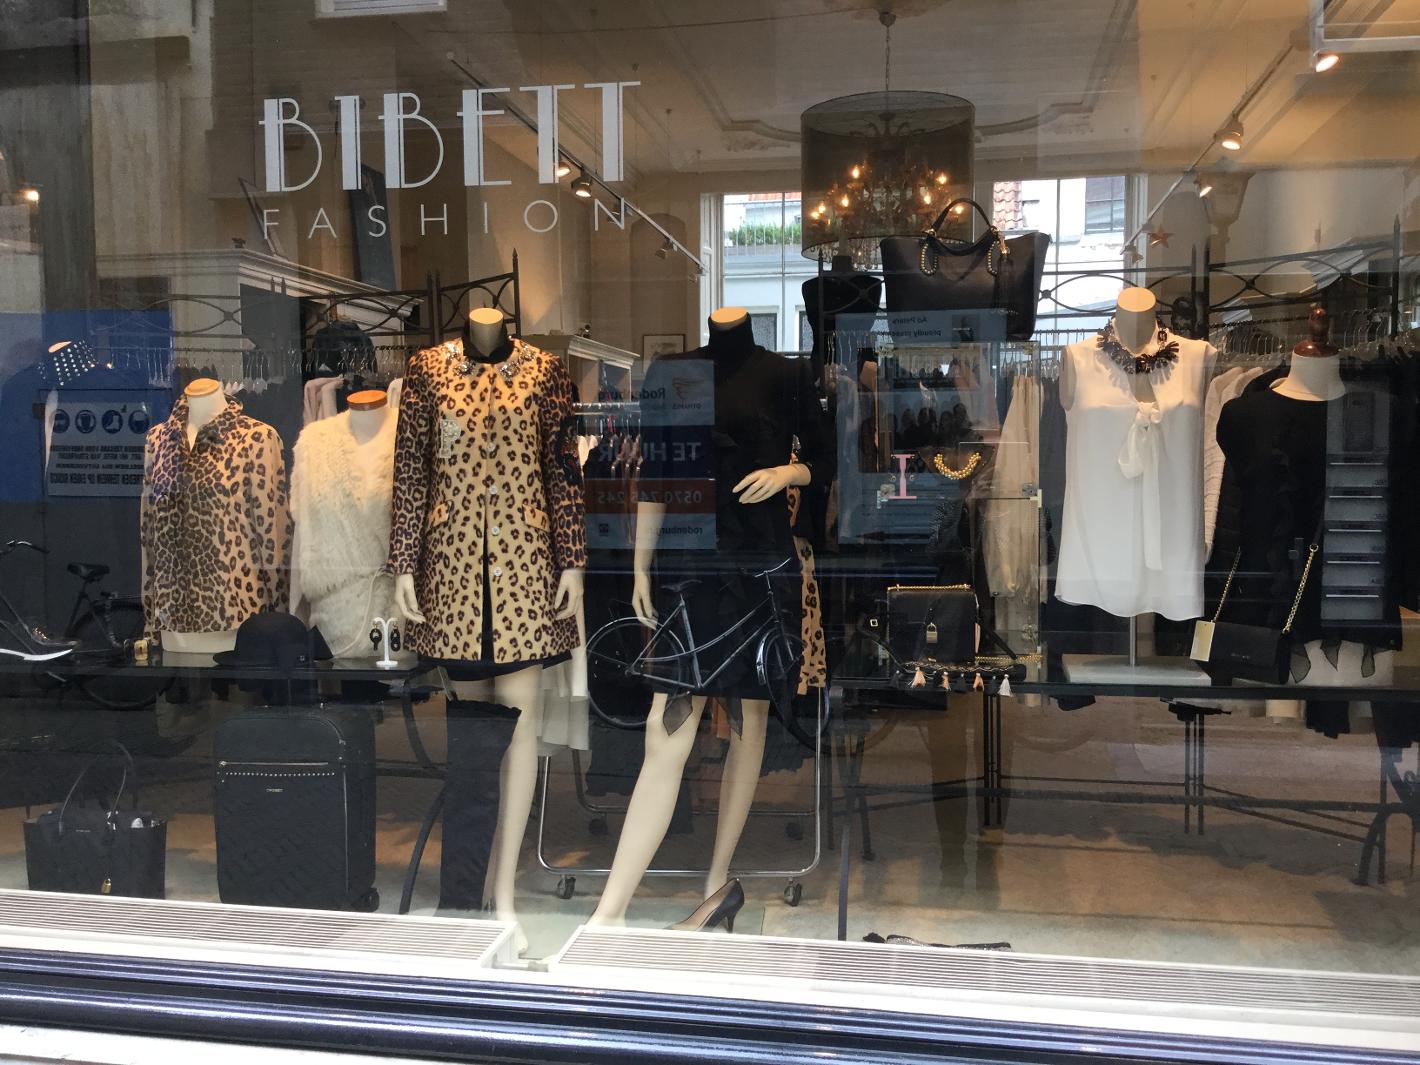 Foto Bibett in Deventer, Winkelen, Gezellig shoppen - #1